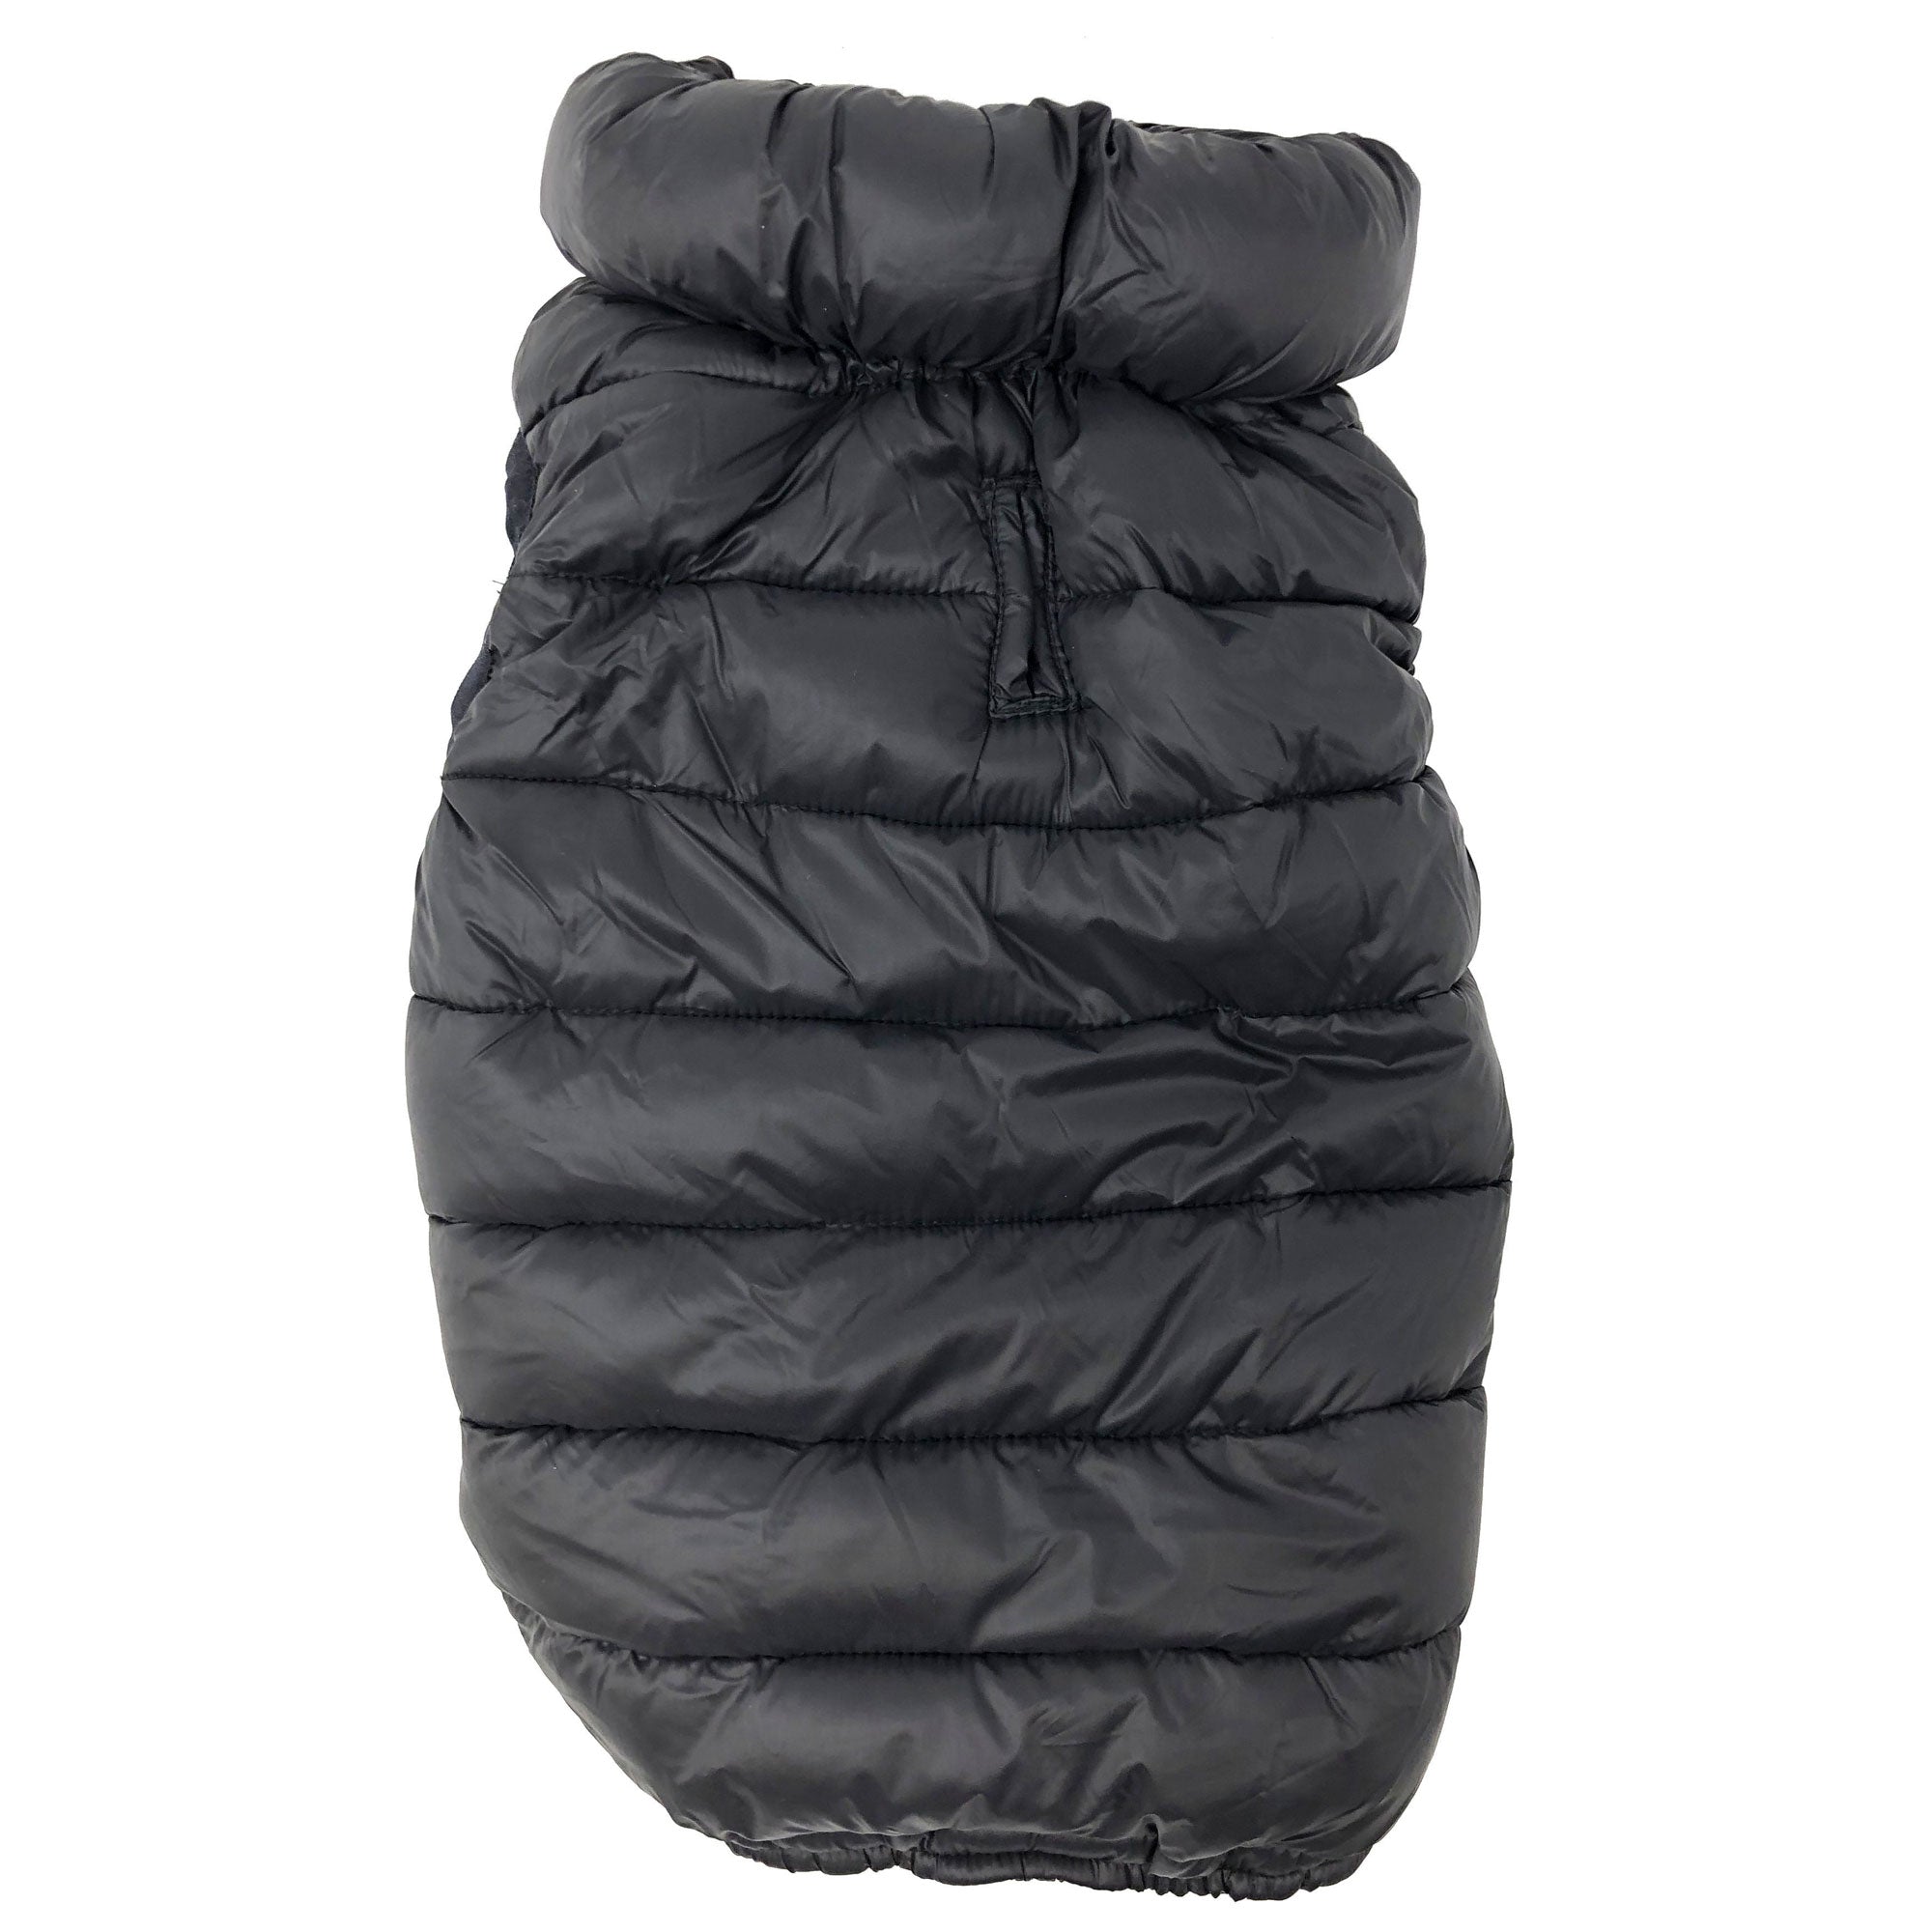 Pet Life® Black Pursuit Thermal Dog Jacket - Large